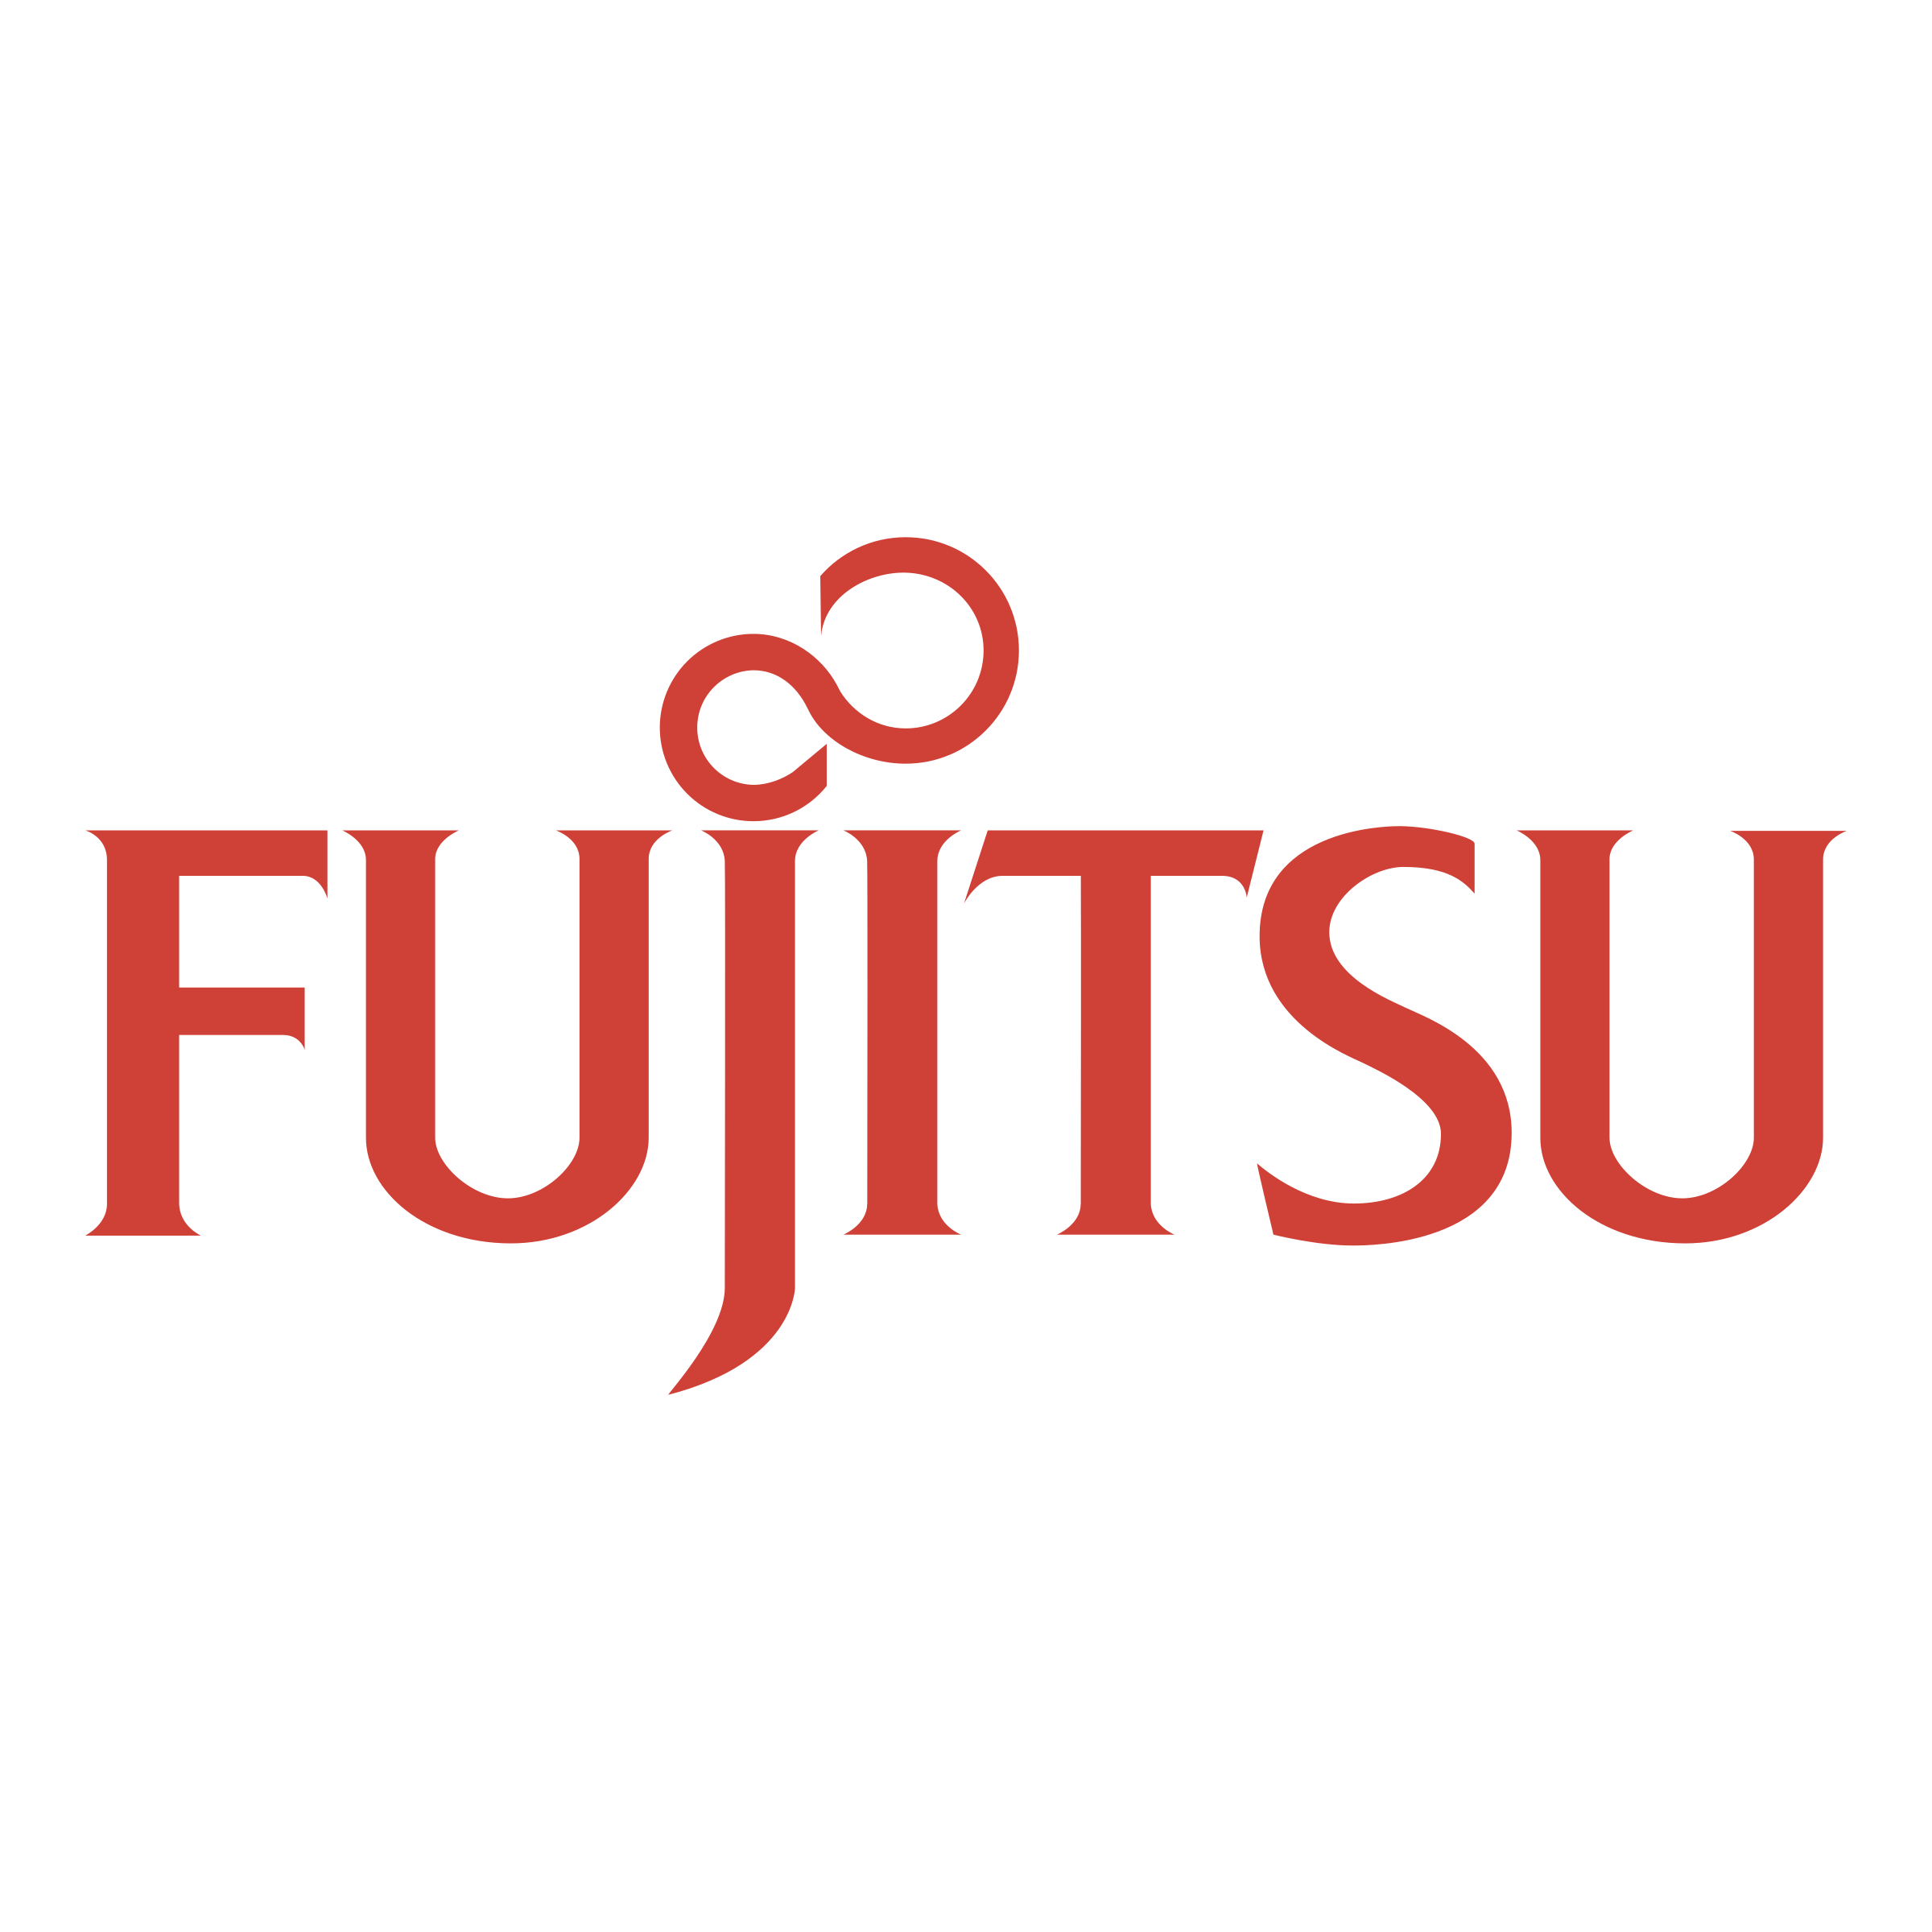 fujitsu-logo-png-transparent (1)